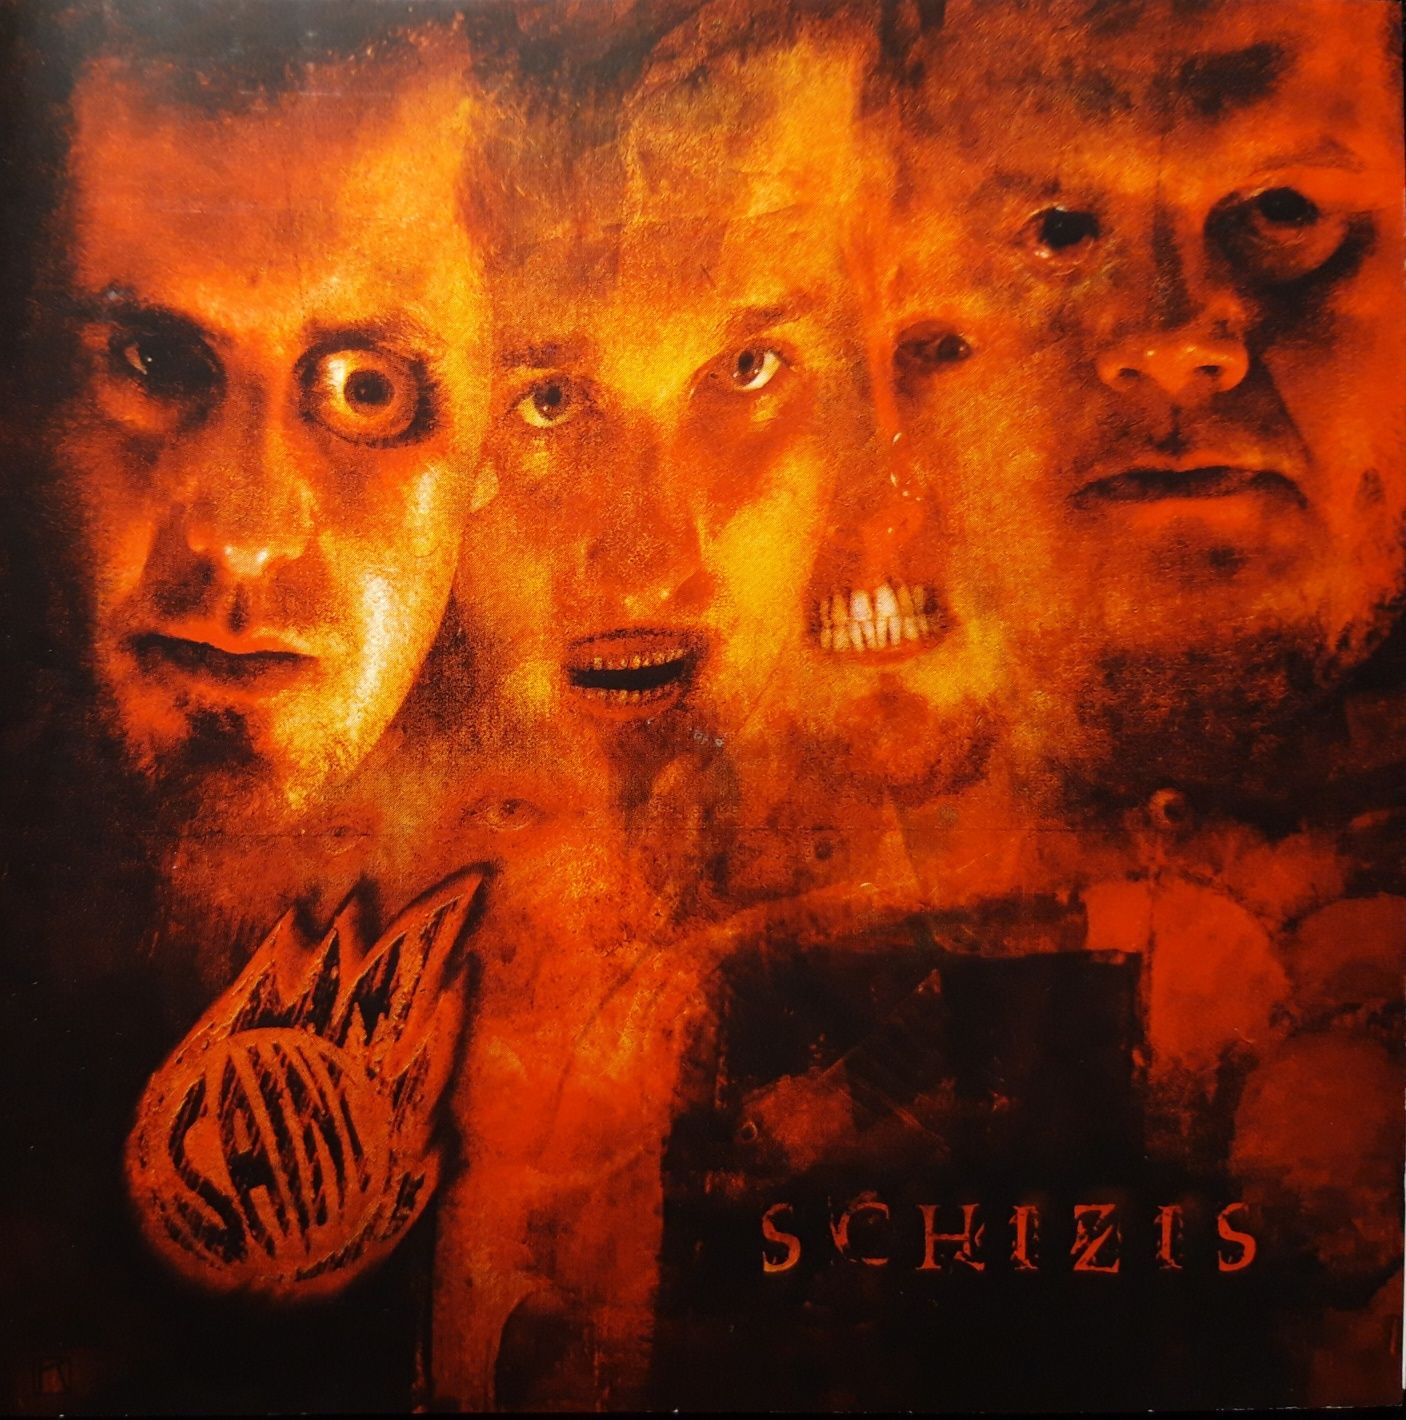 Sainc – Schizis (CD, 2010)